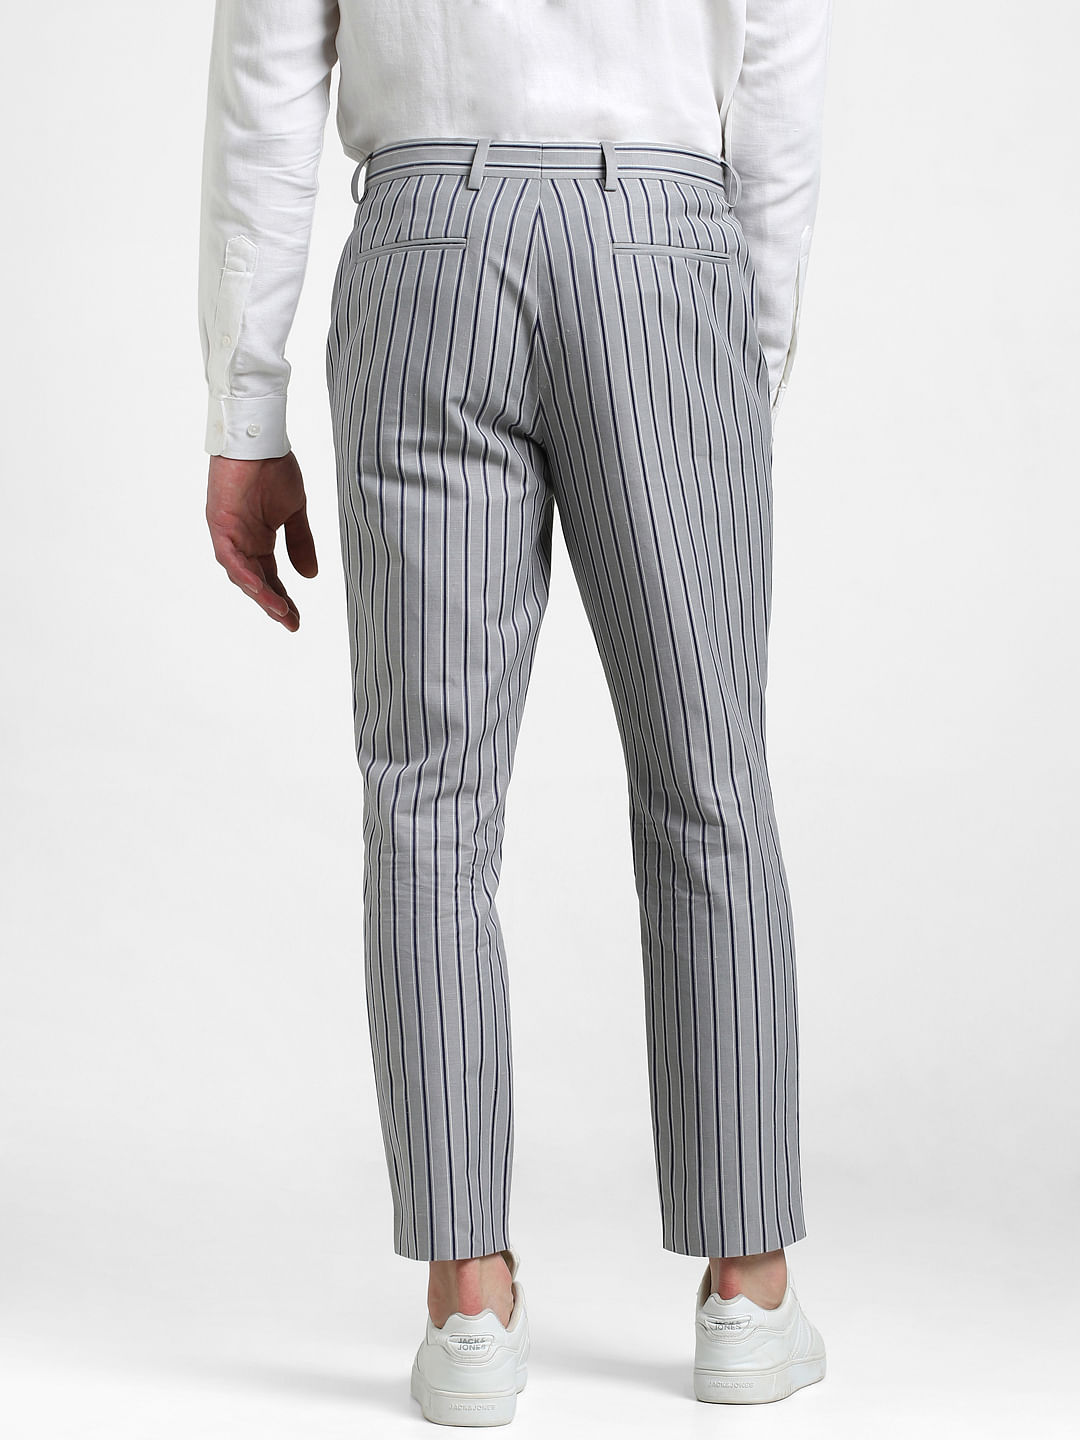 Lars Amadeus Khaki Striped Pants for Men's Skinny Flat Front Business Dress  Trousers 30 at Amazon Men's Clothing store